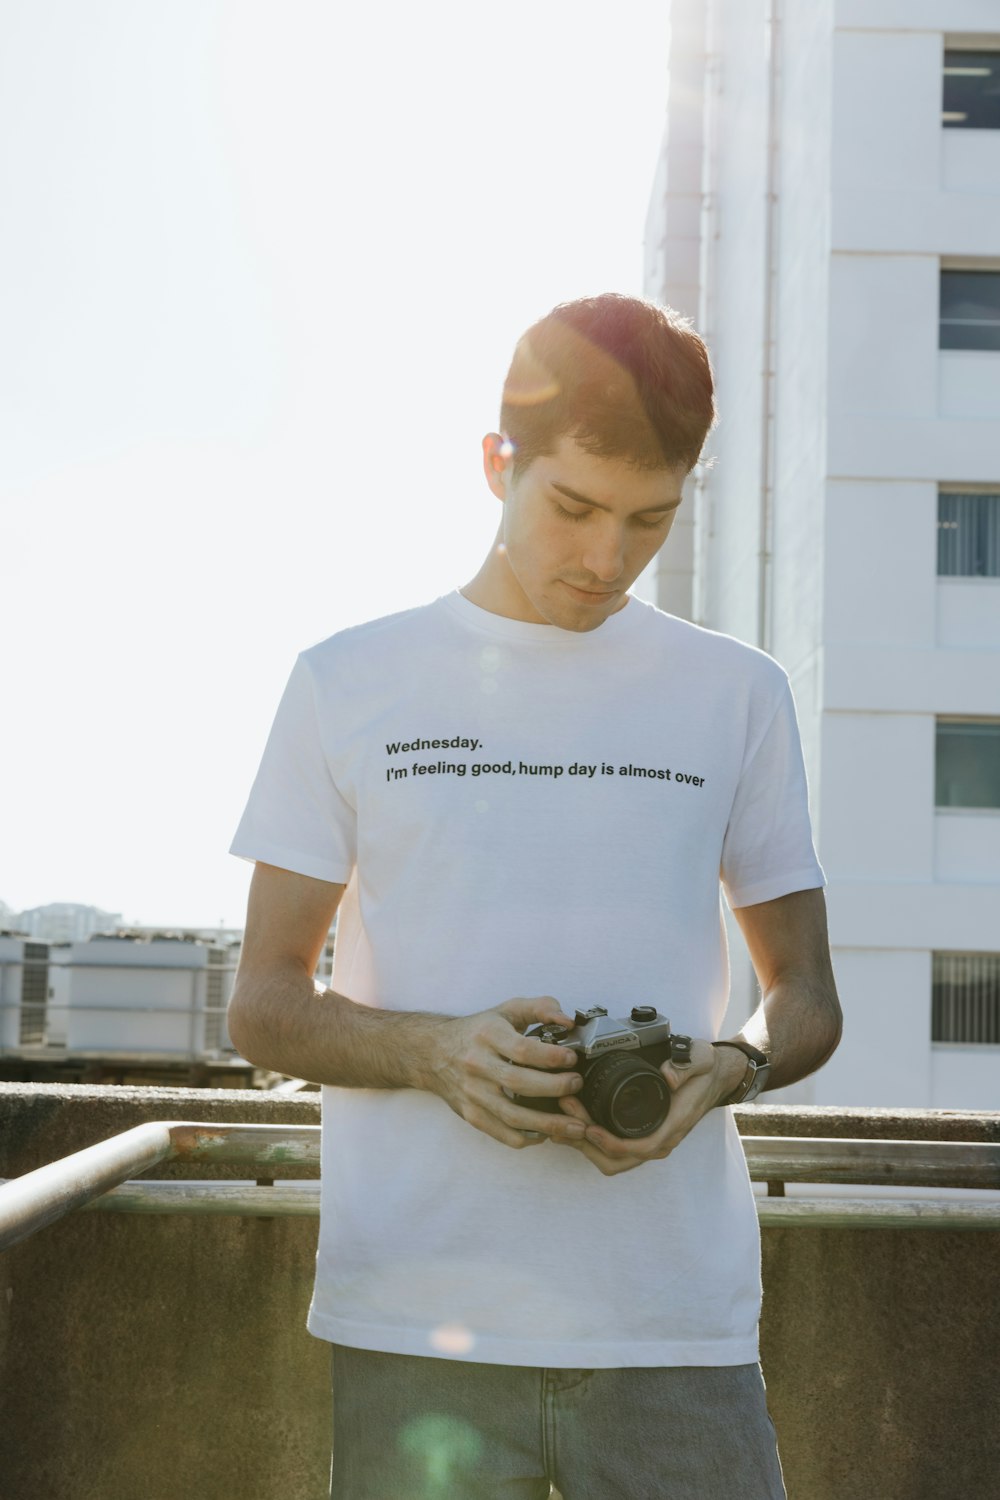 uomo in t-shirt girocollo bianca con fotocamera DSLR nera